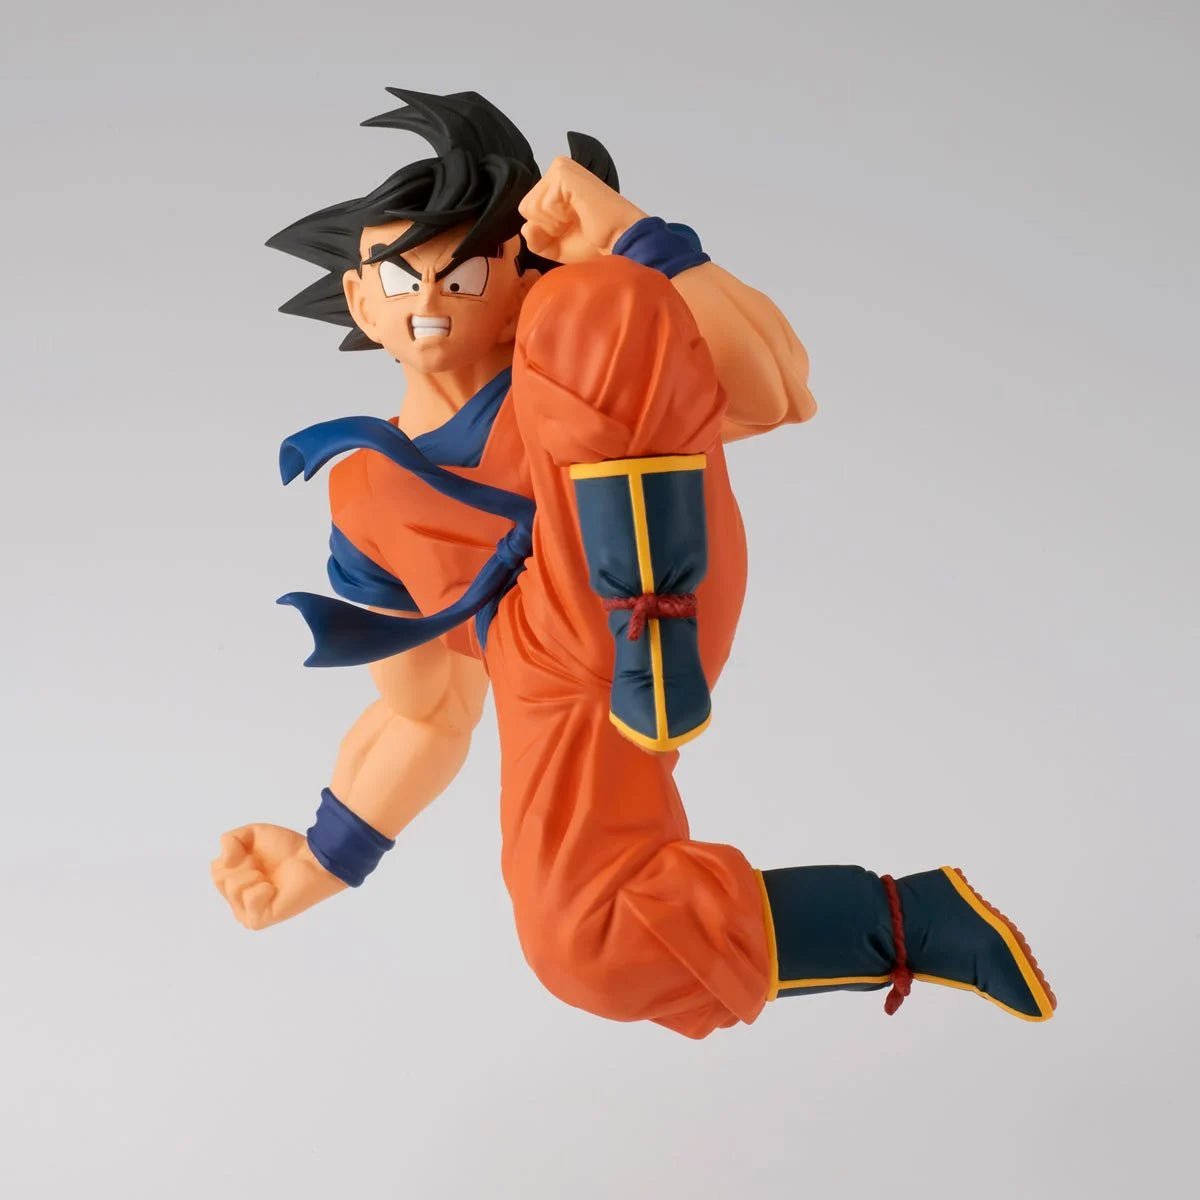 Banpresto - Goku Match Makers Statue (Dragon Ball Z) - Good Game Anime